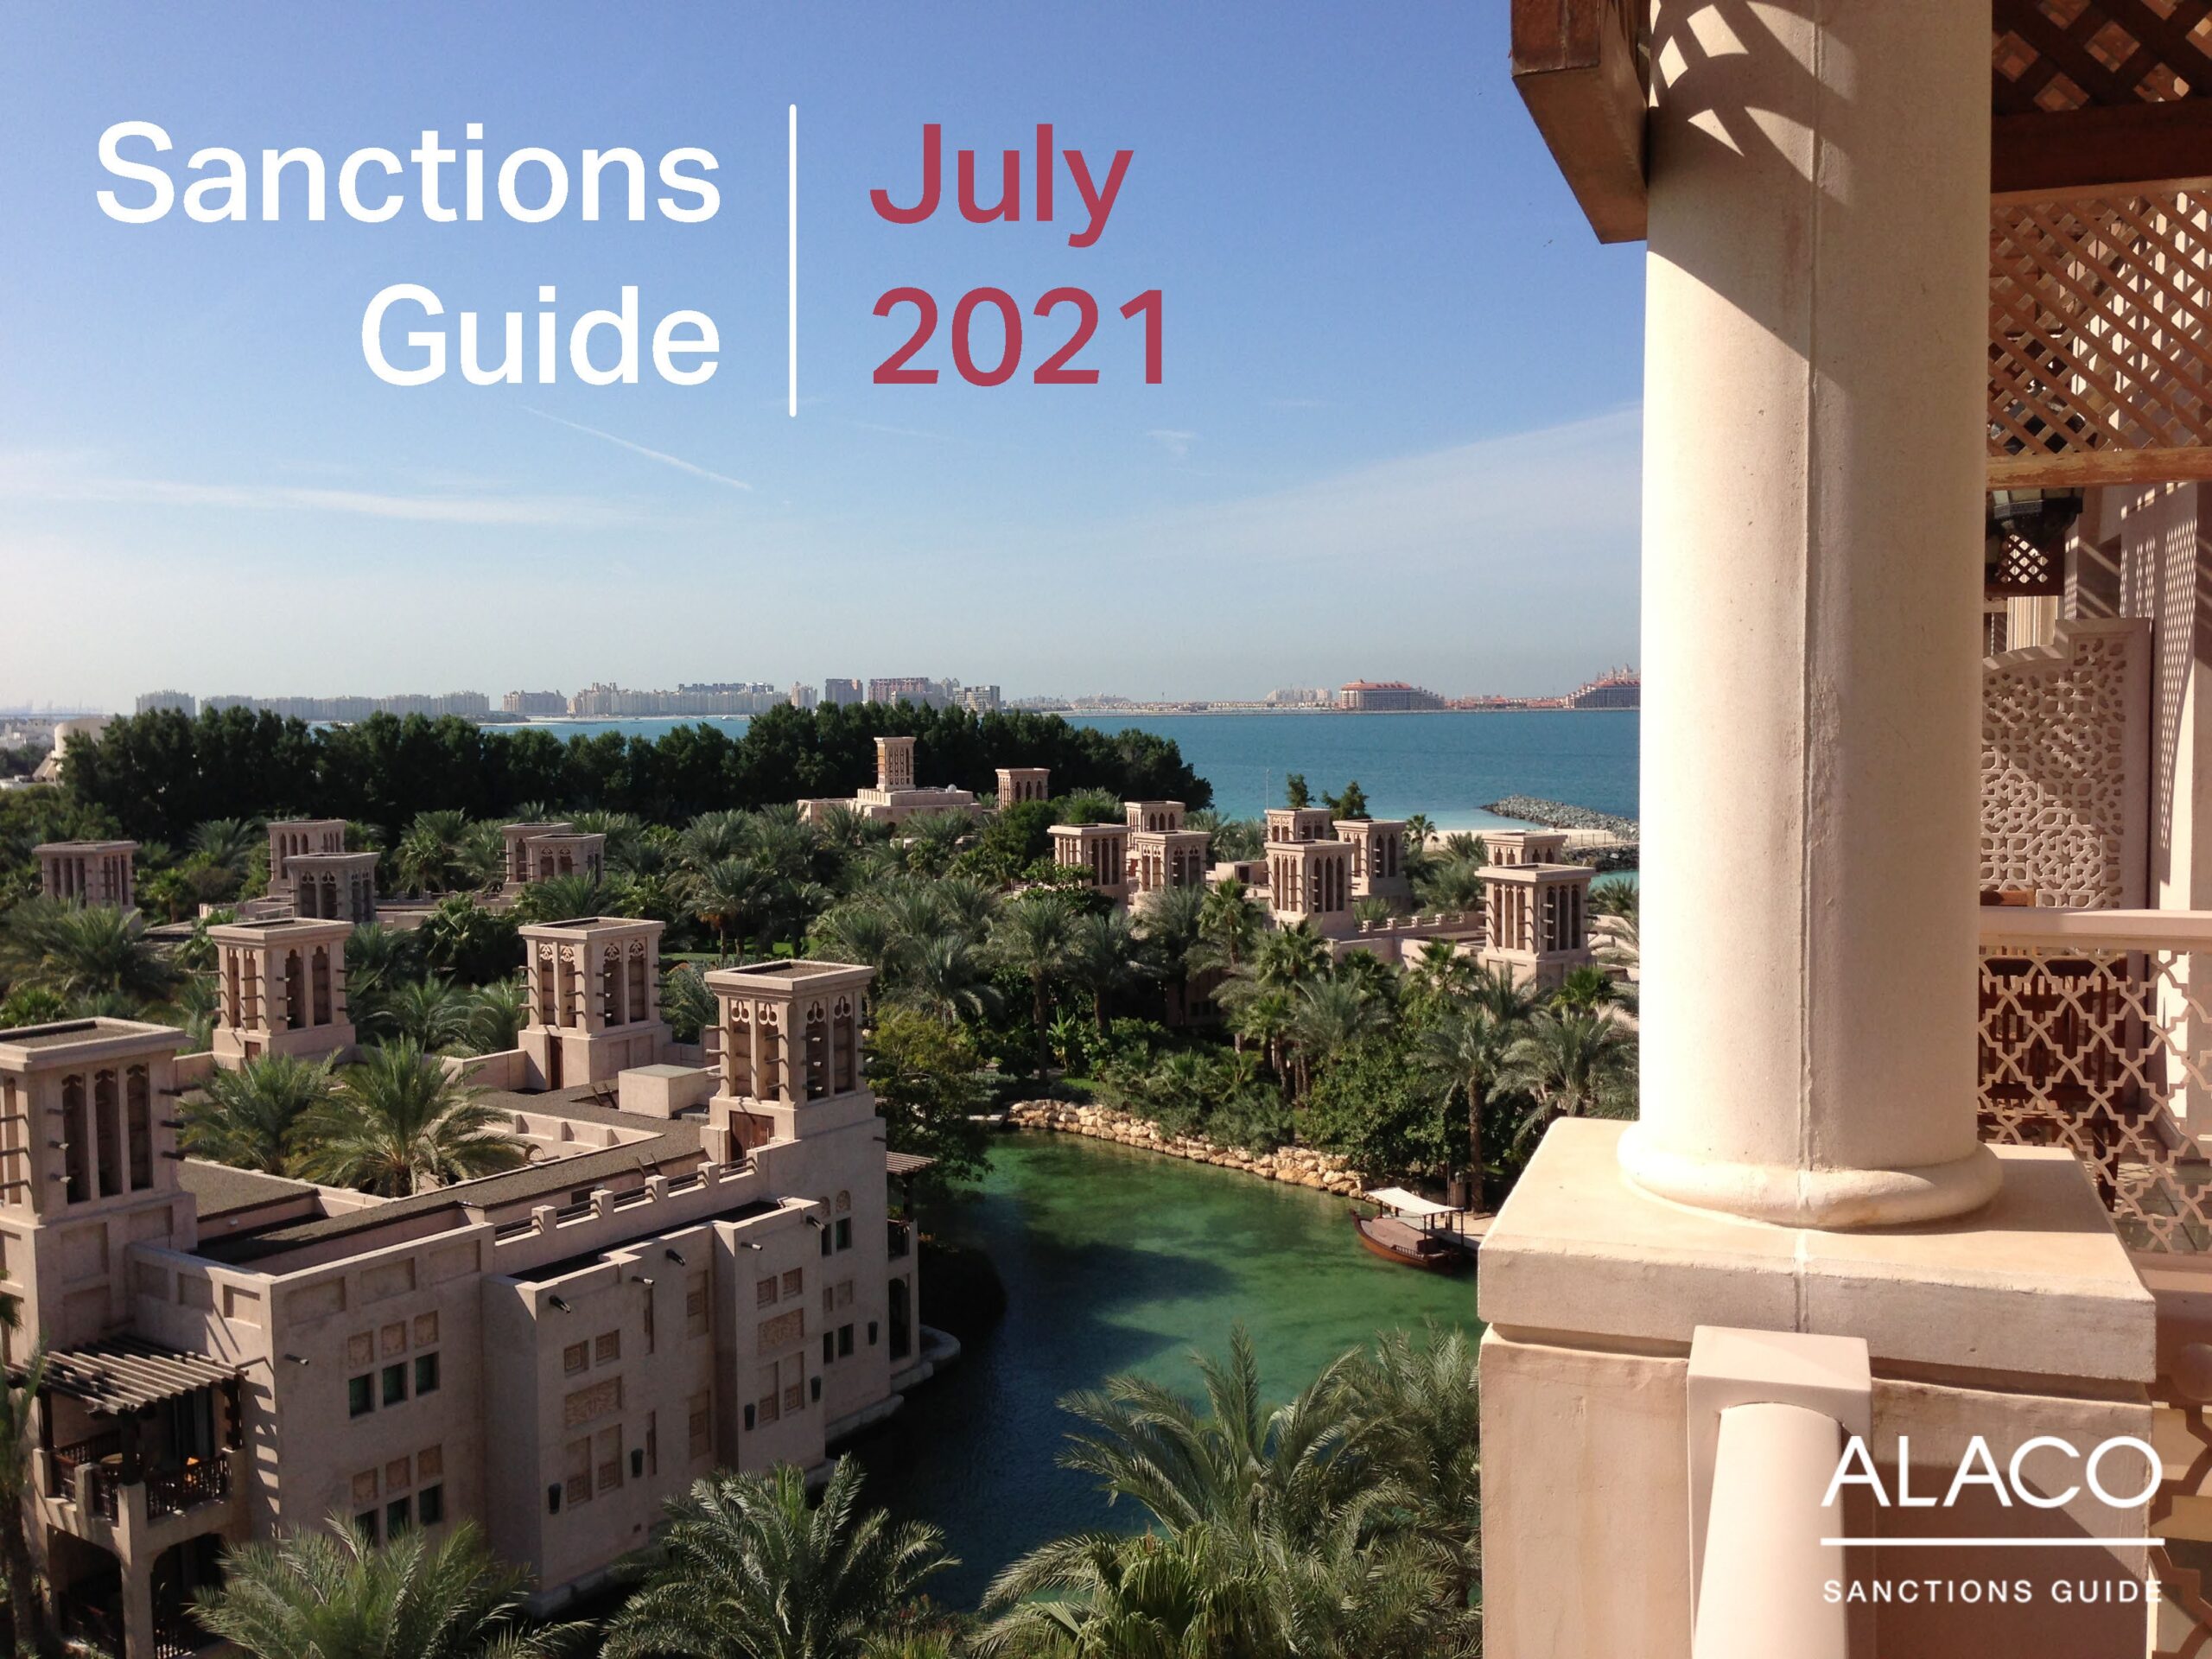 Sanctions Guide – July 2021